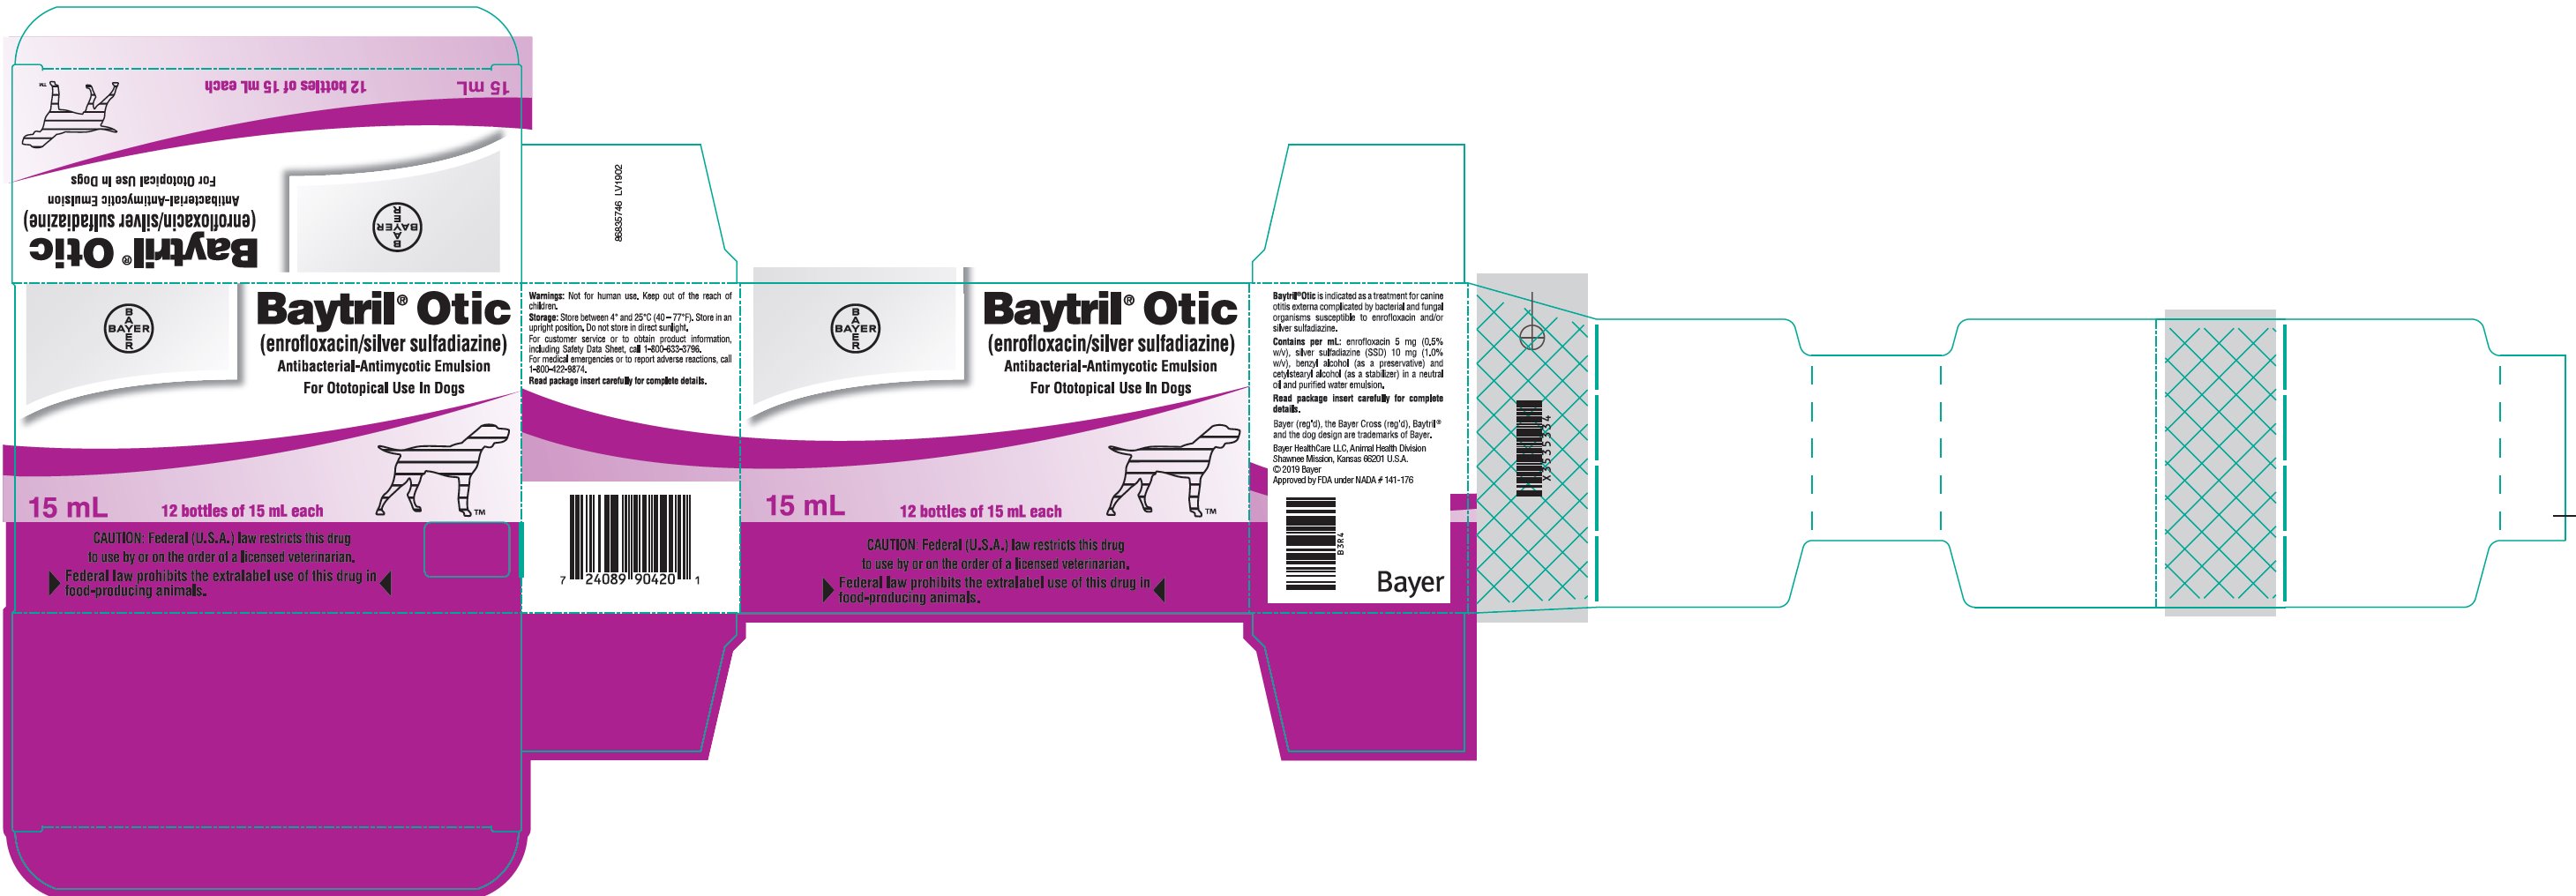 Baytril Otic (enrofloxacin/silver sulfadiazine) carton label